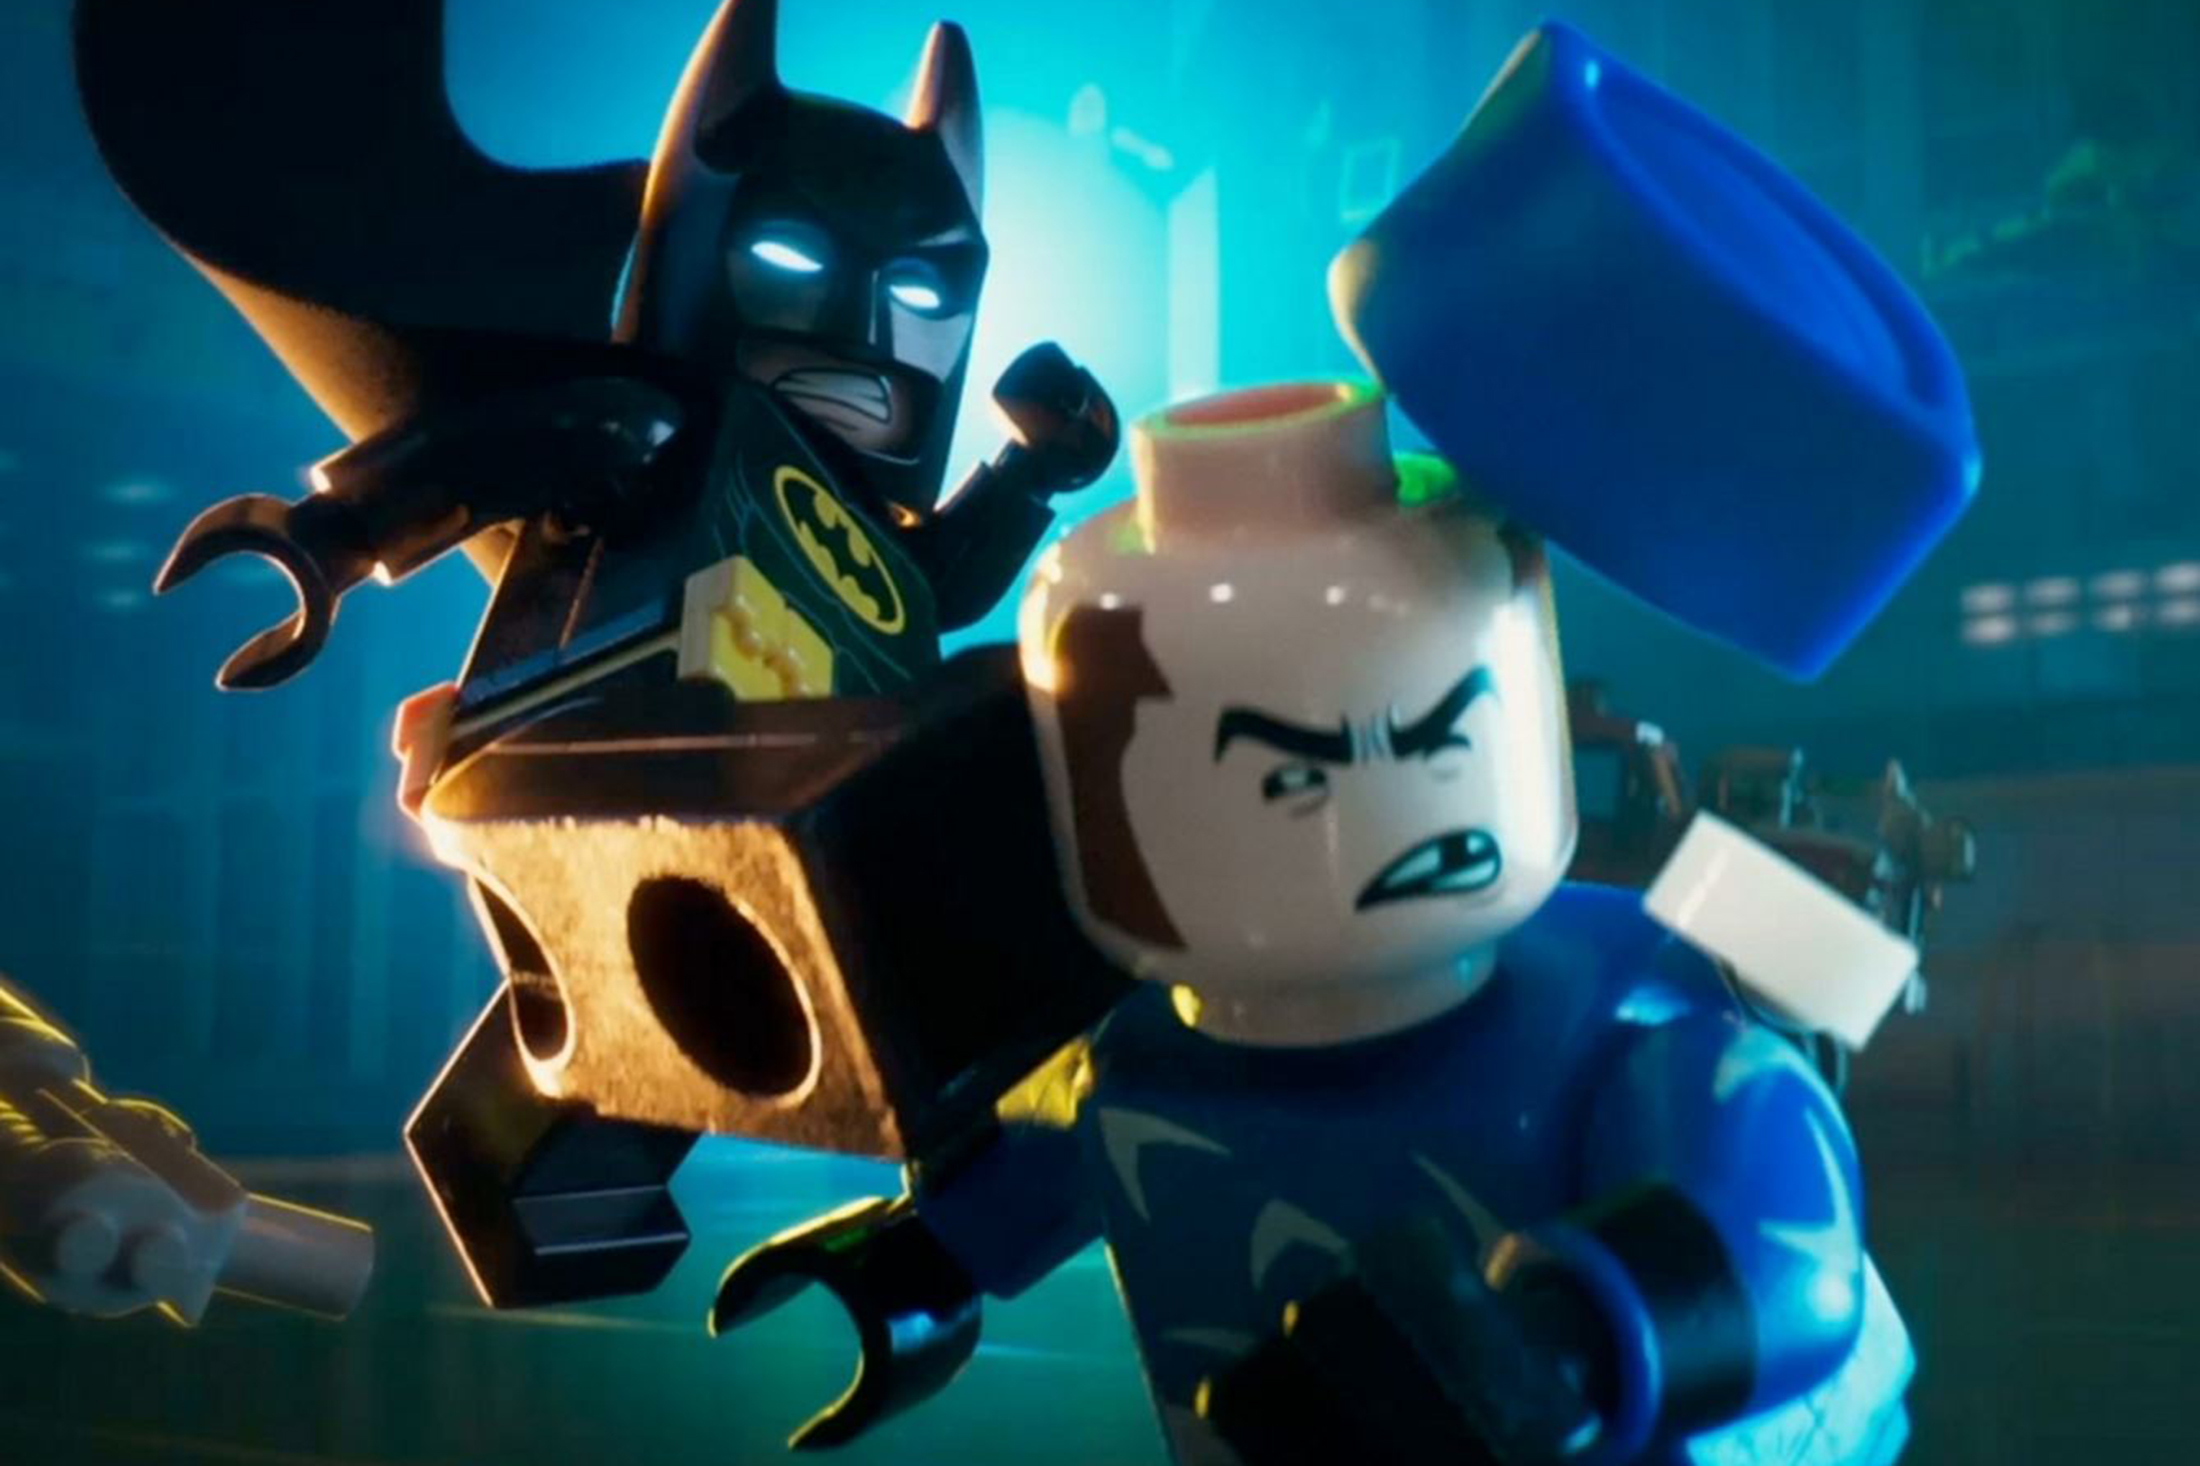 Lego Batman in action.
